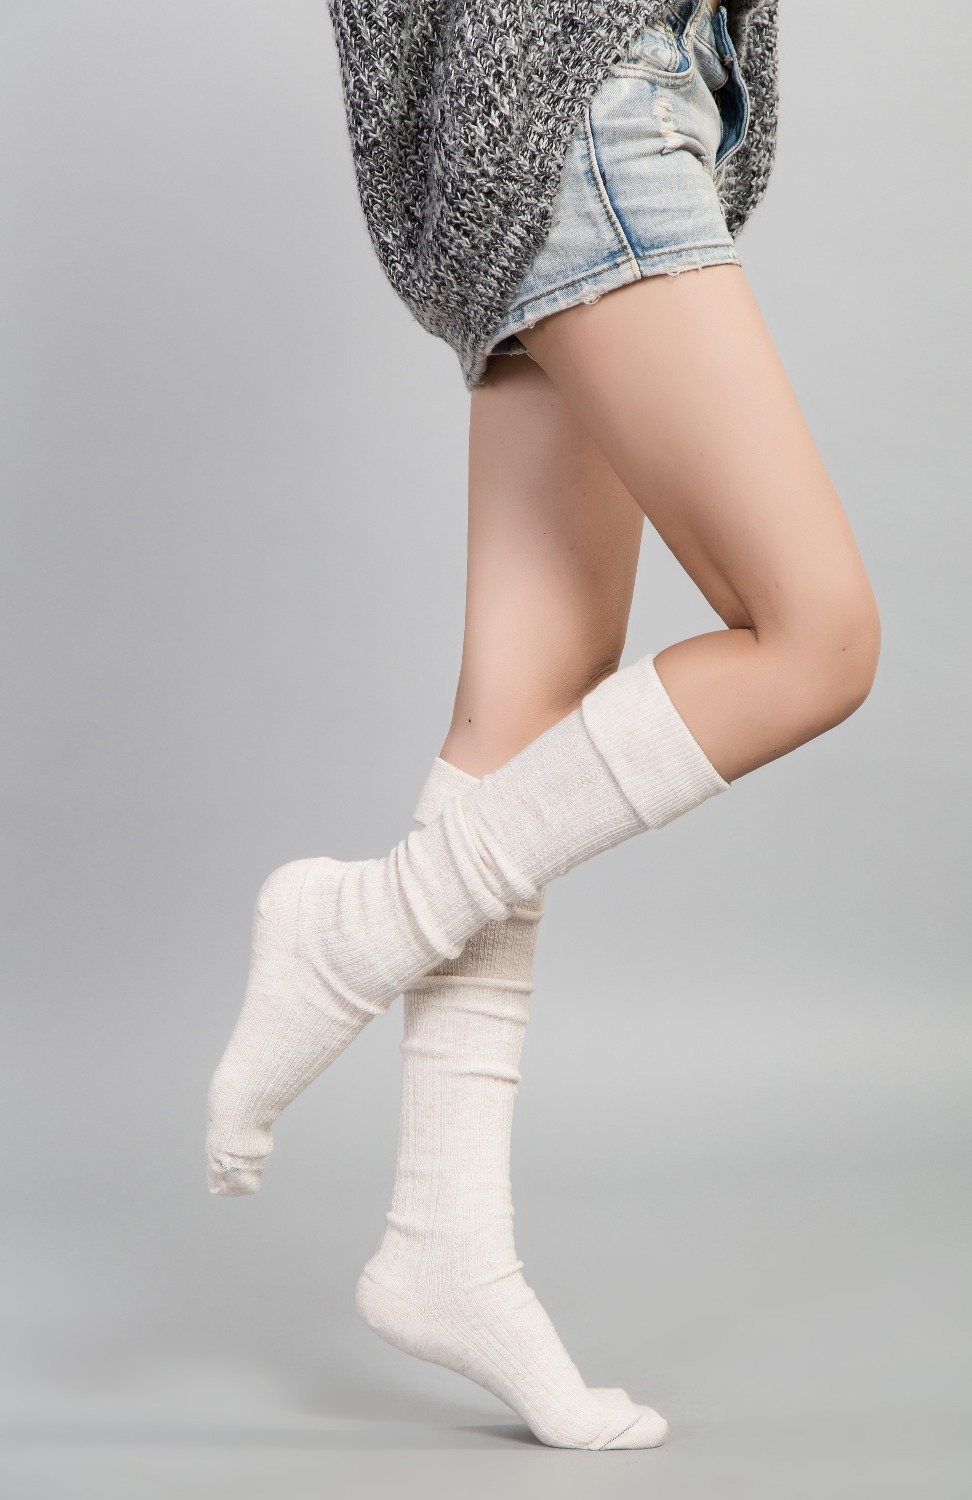 Horny Woman In Thigh High Socks Pics 88